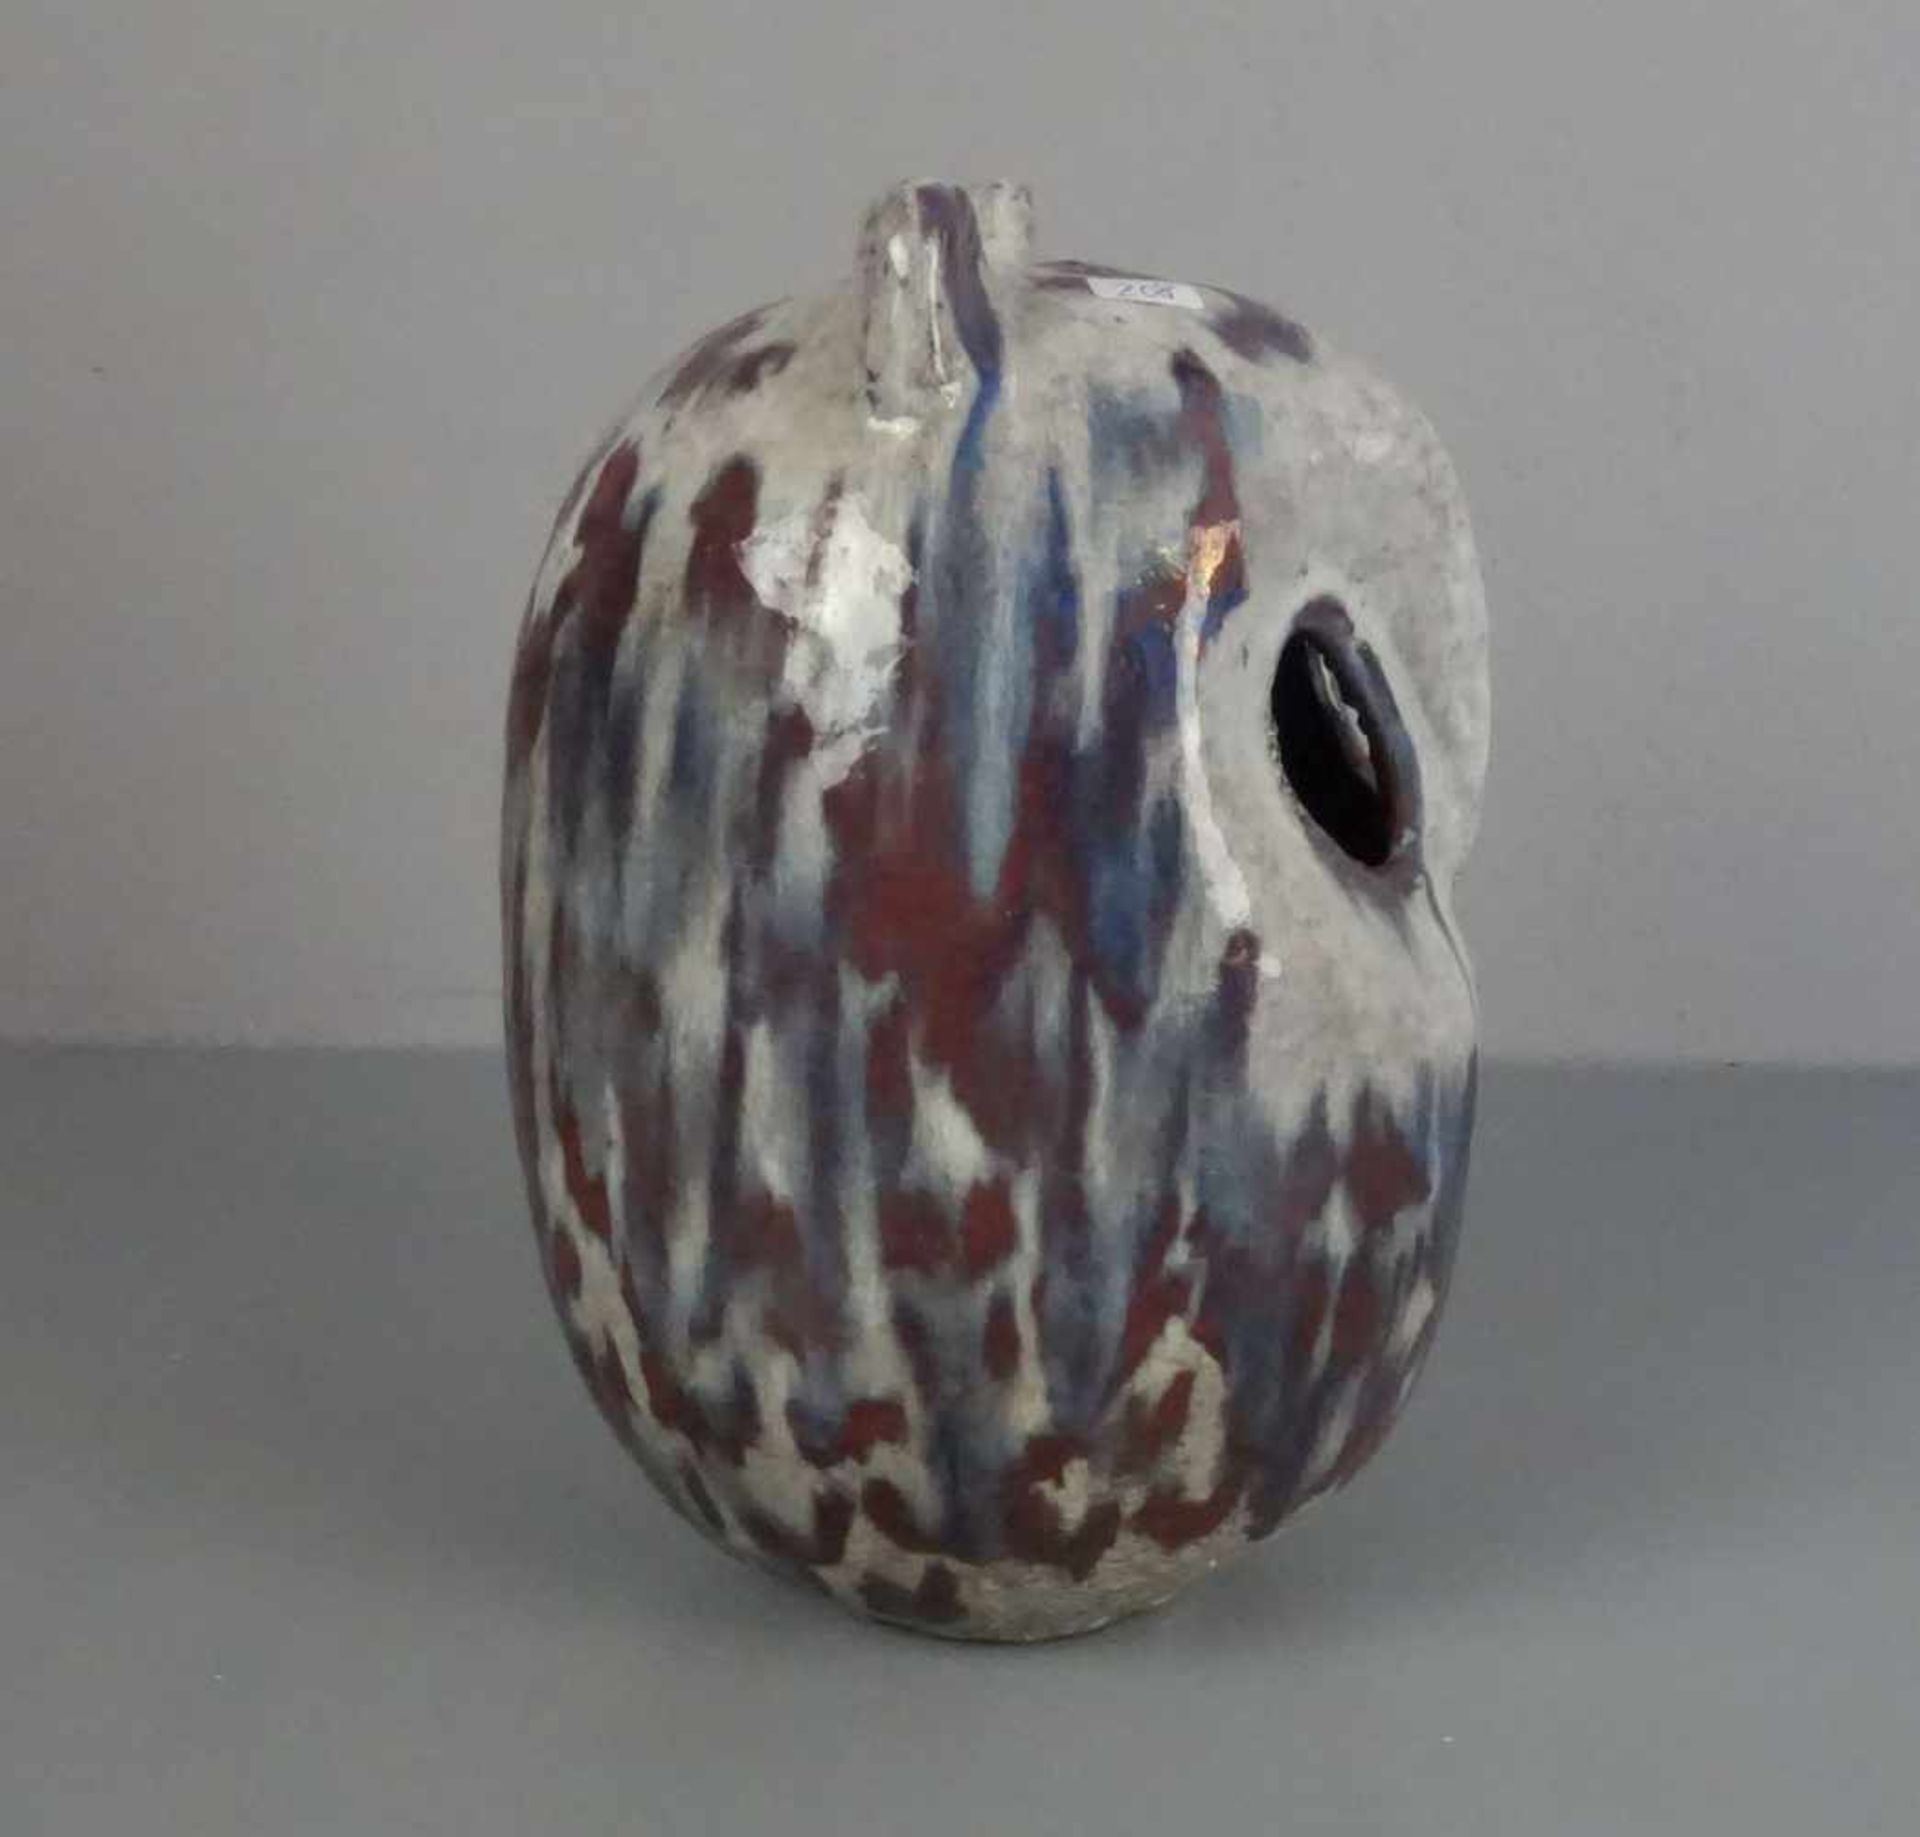 KÜNSTLERKERAMIK / SKULPTUR: "Eule" / owl pottery sculpture, Mitte 20. Jh., Studiokeramik, - Image 2 of 4